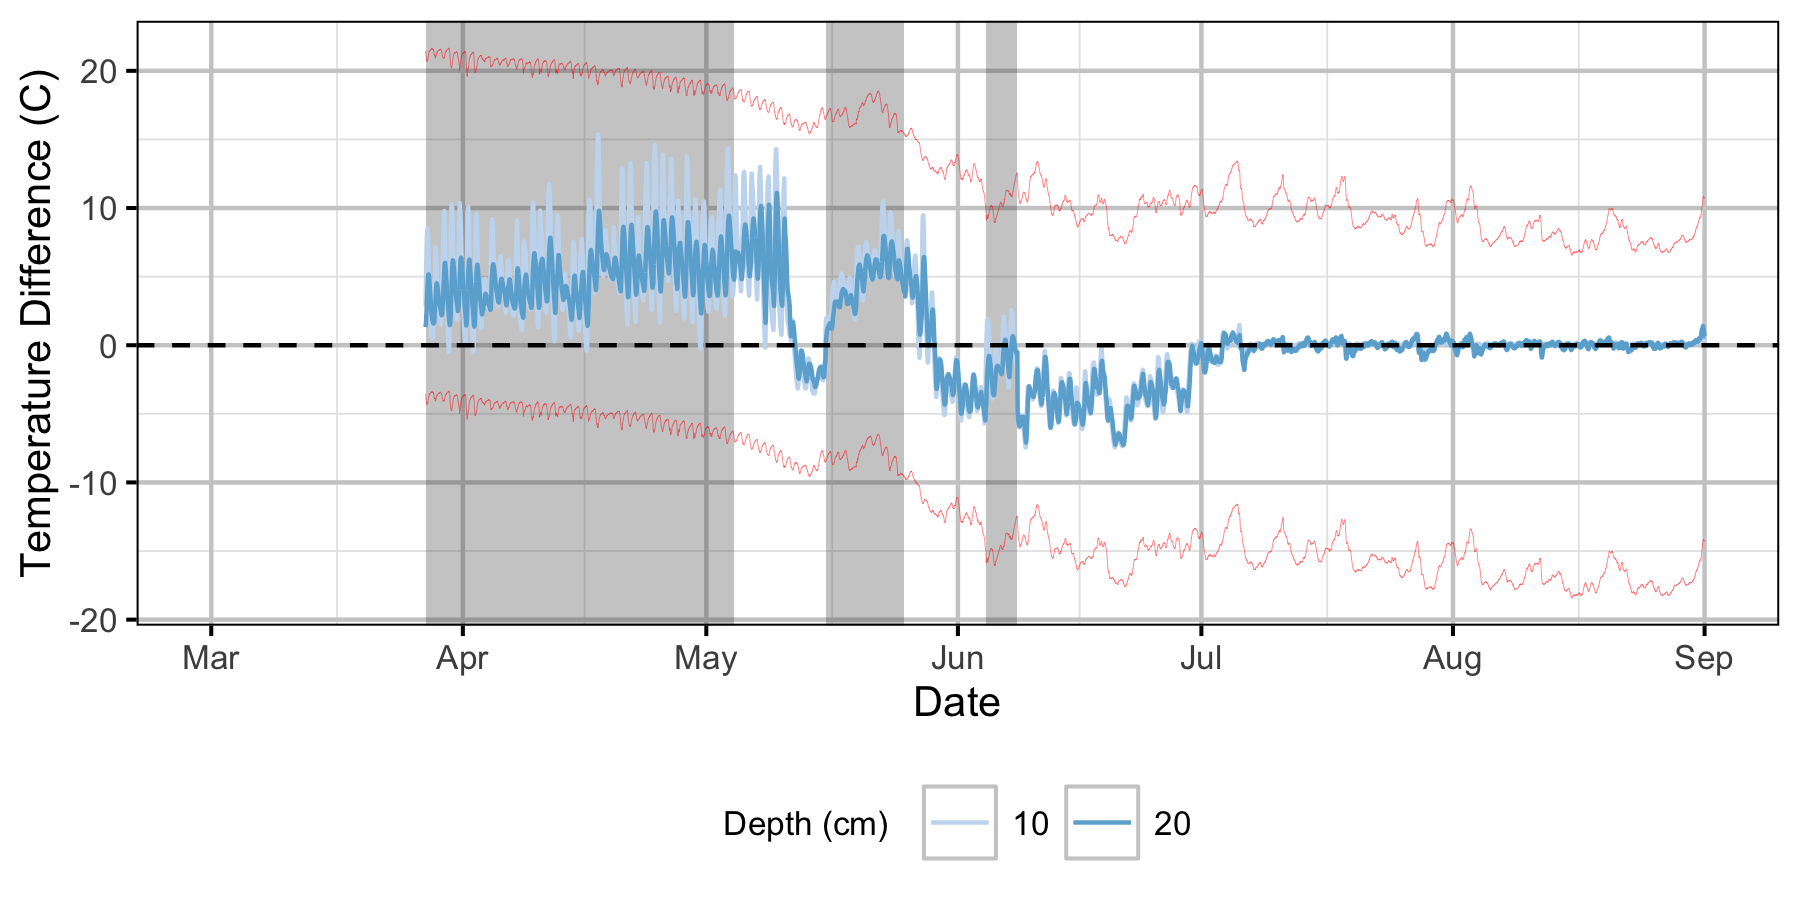 figures/Sensor Data/Relative Gravel Temperature Stations/Norns Creek Fan/Station04.png